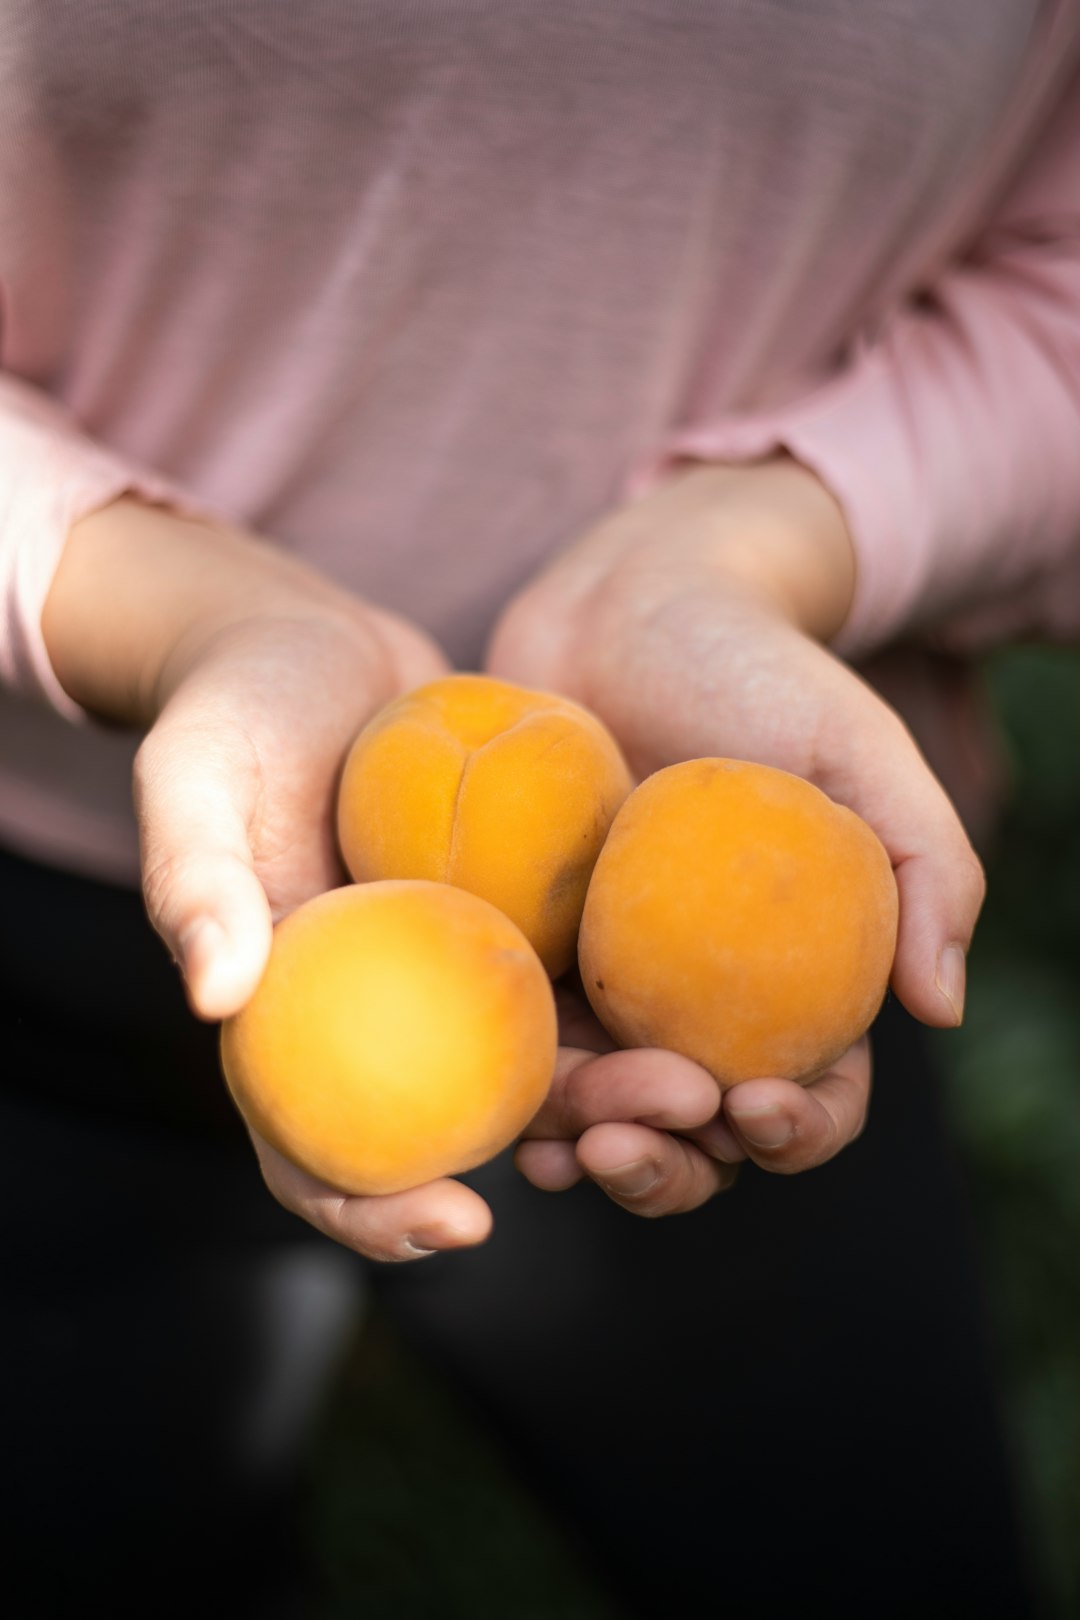 person holding three round orange fruits